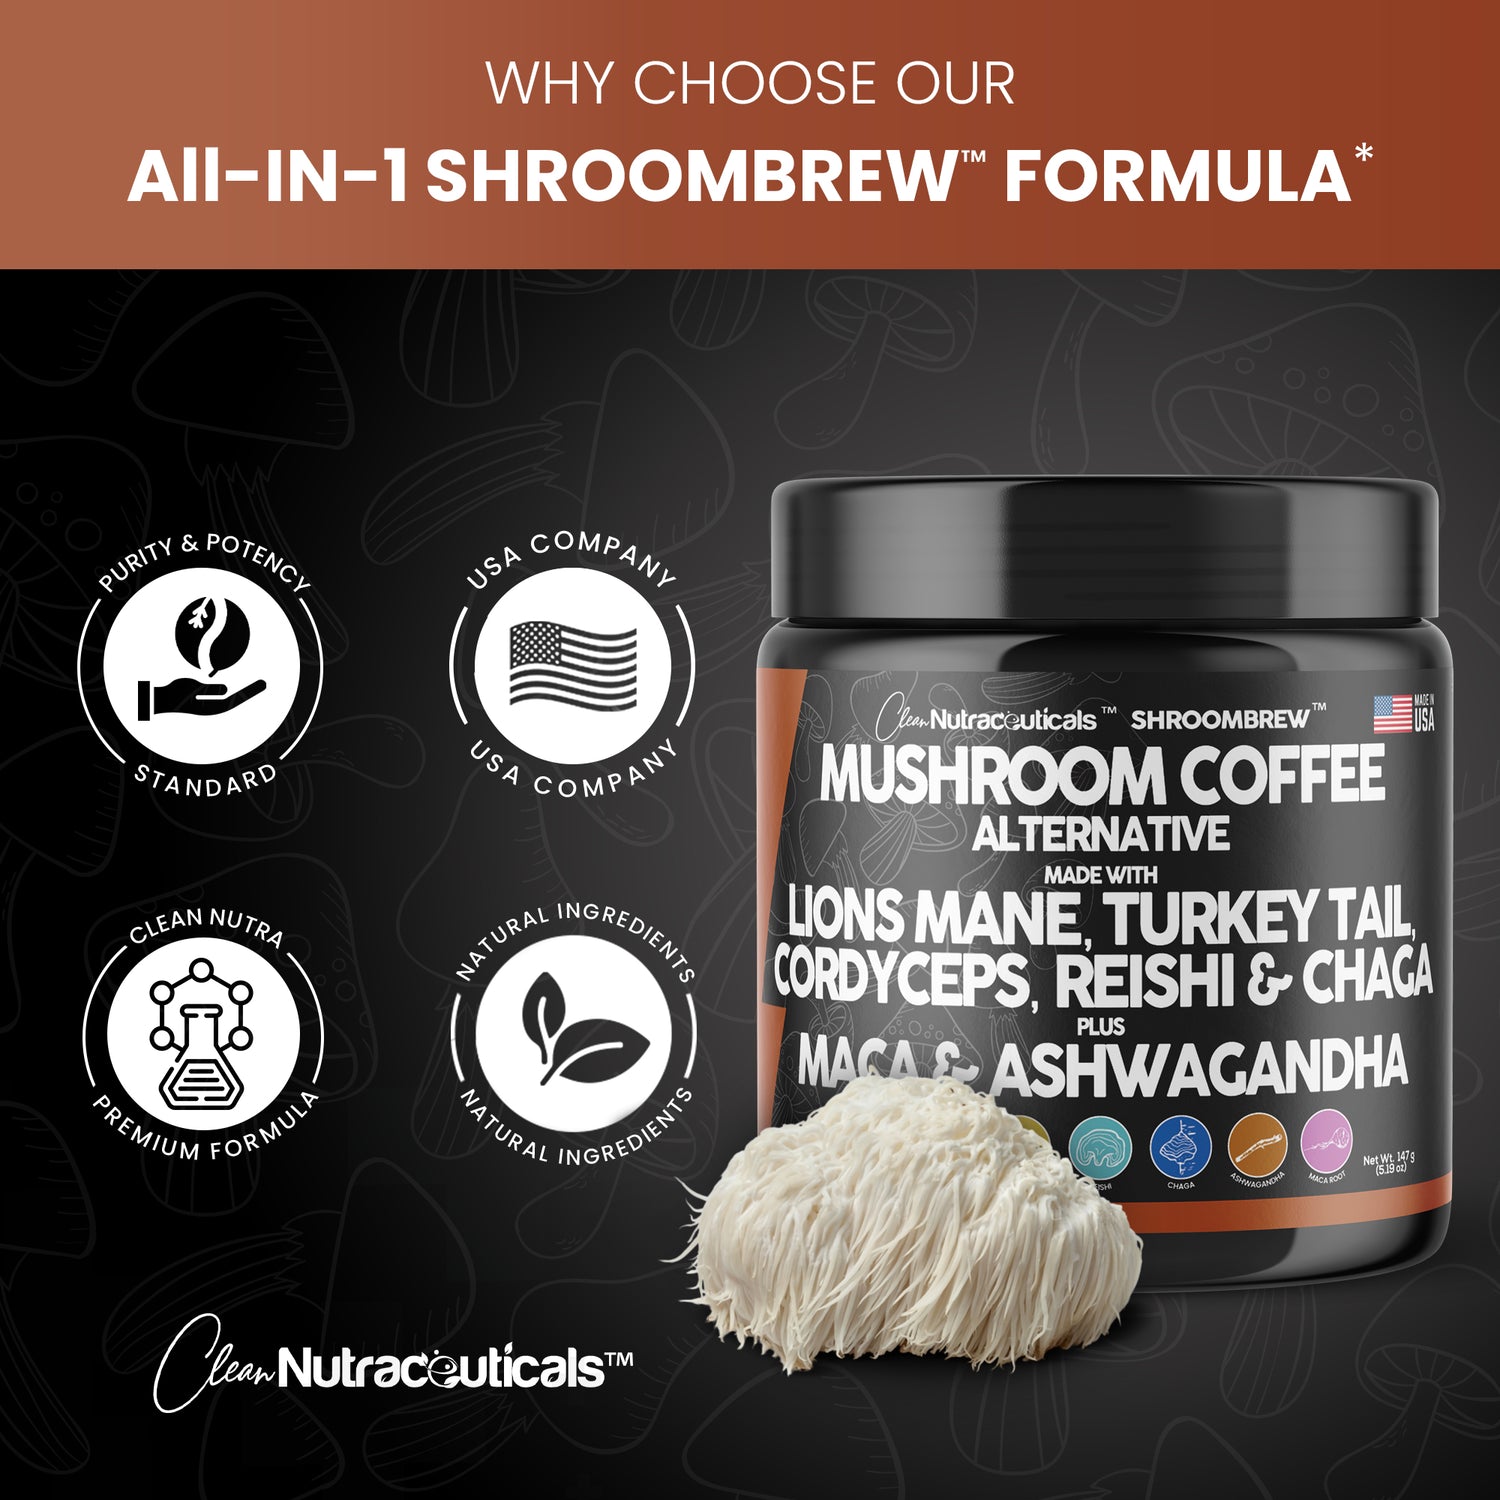 ShroomBrew™